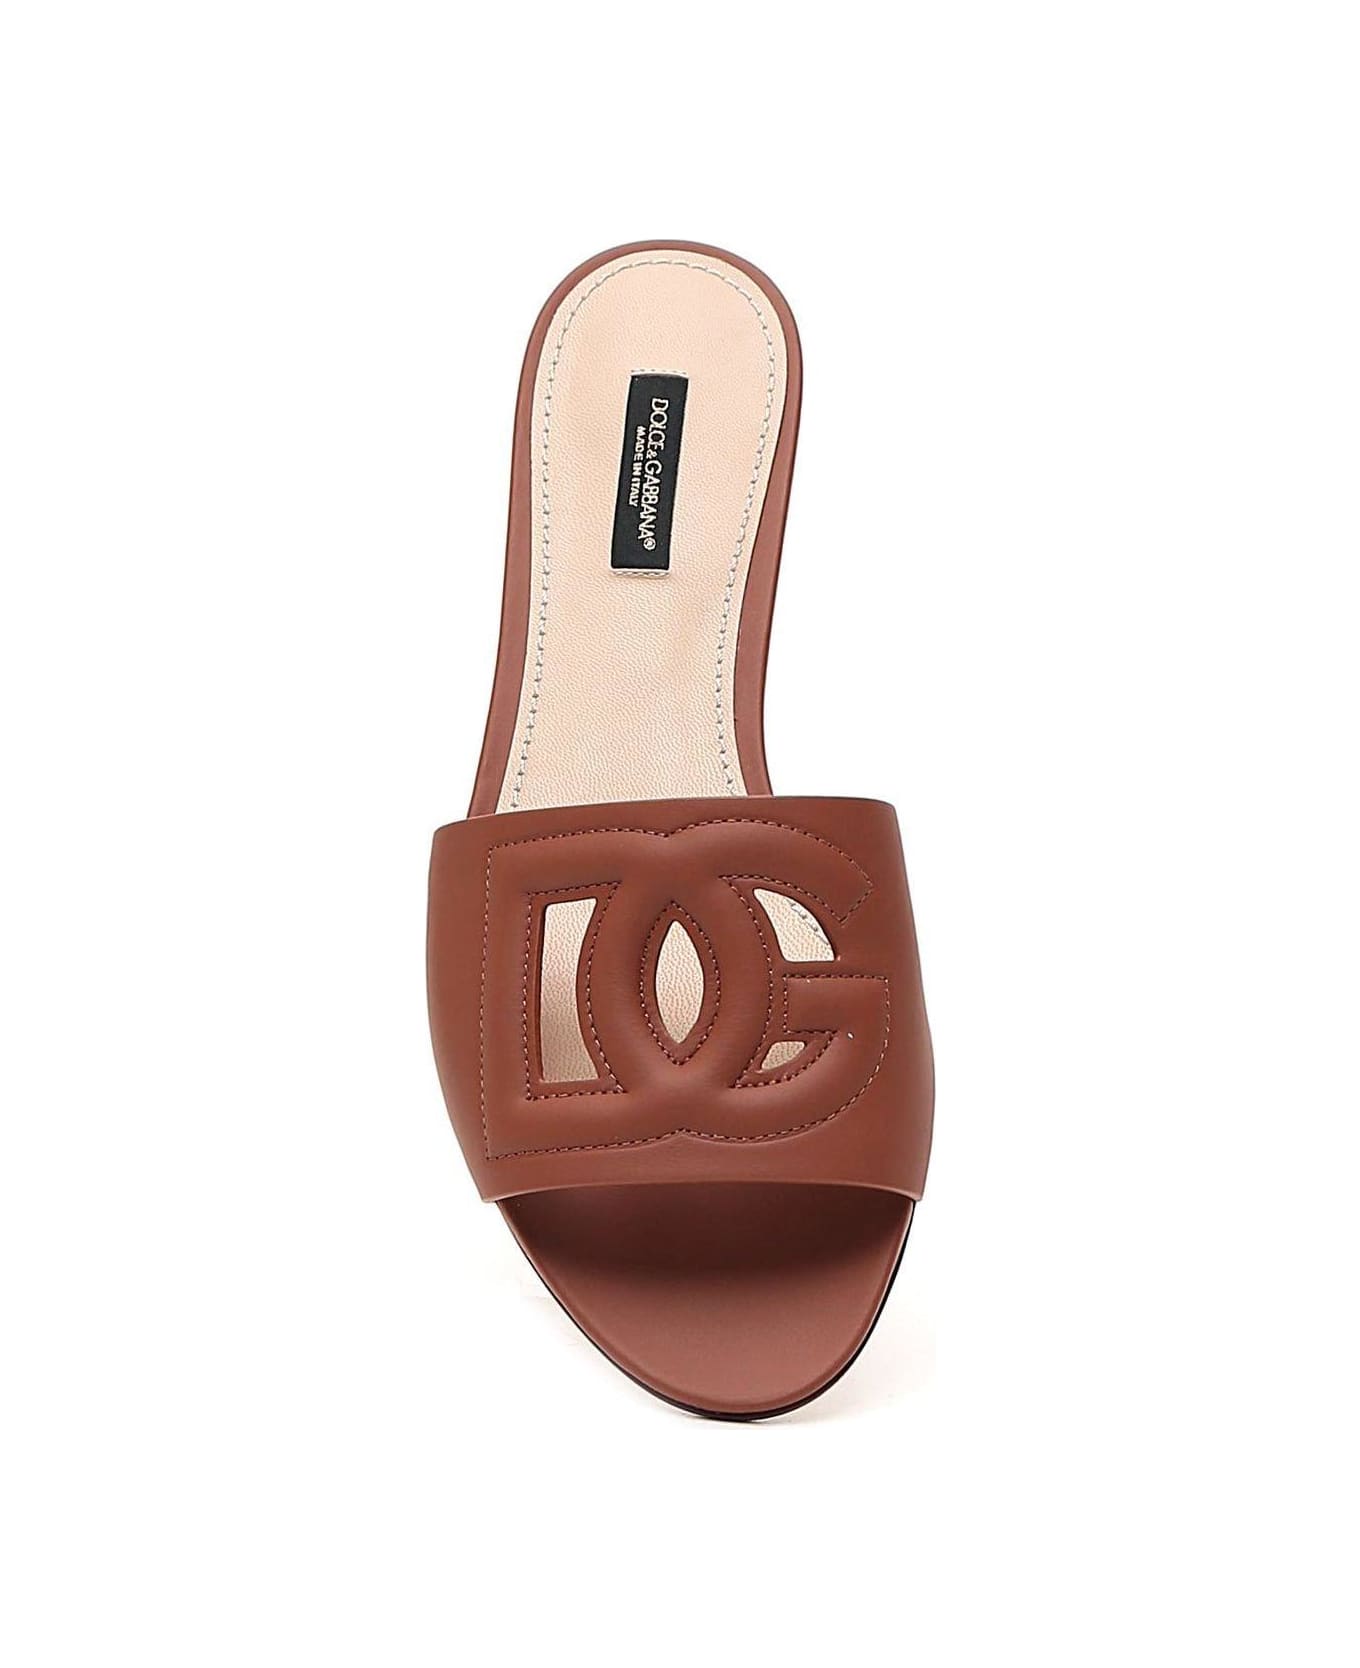 Dolce & Gabbana Logo Cut Out Sandals - Marrone chiaro サンダル